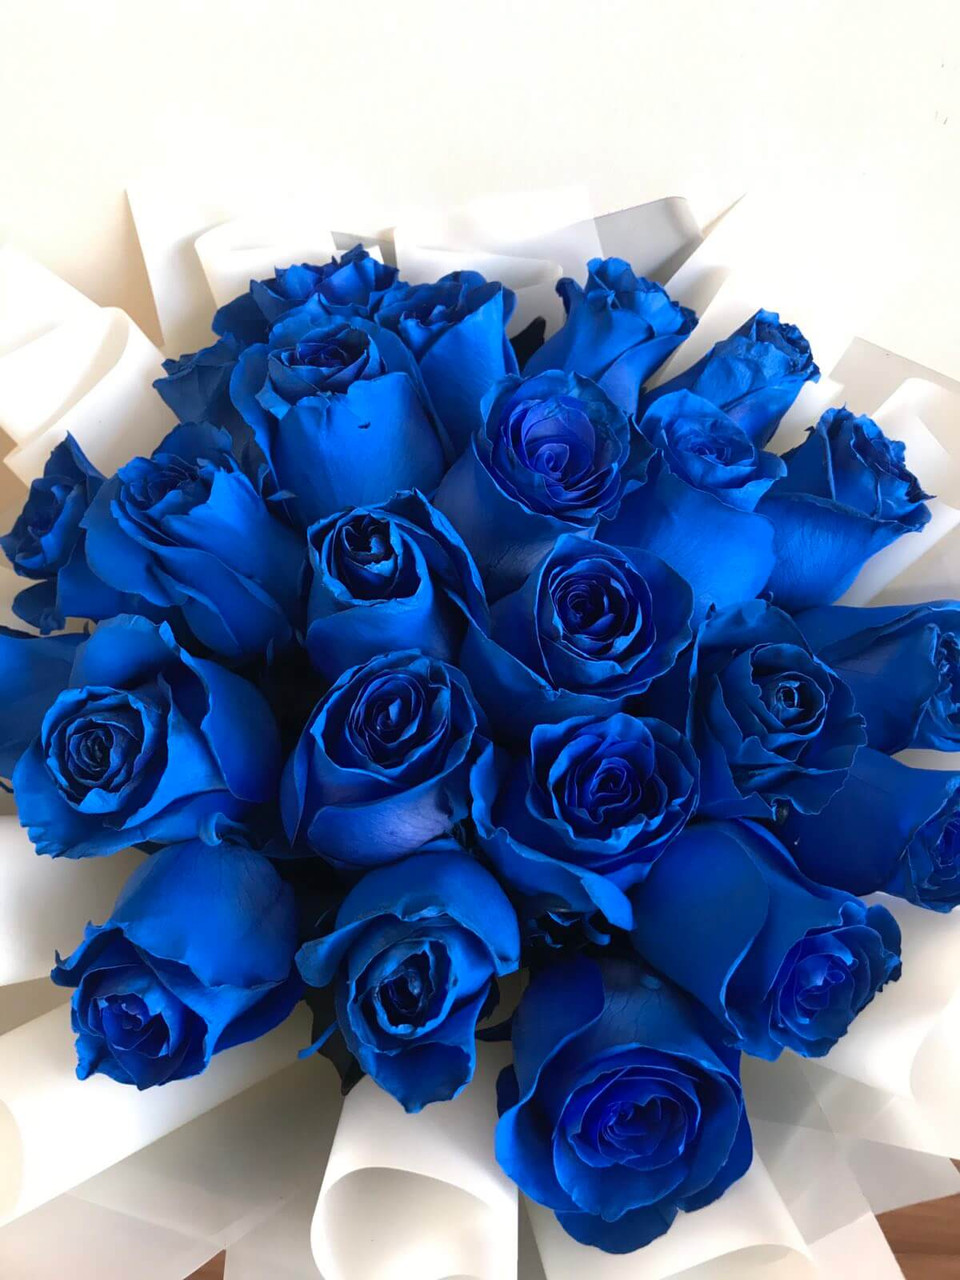 Blue Roses Philippines